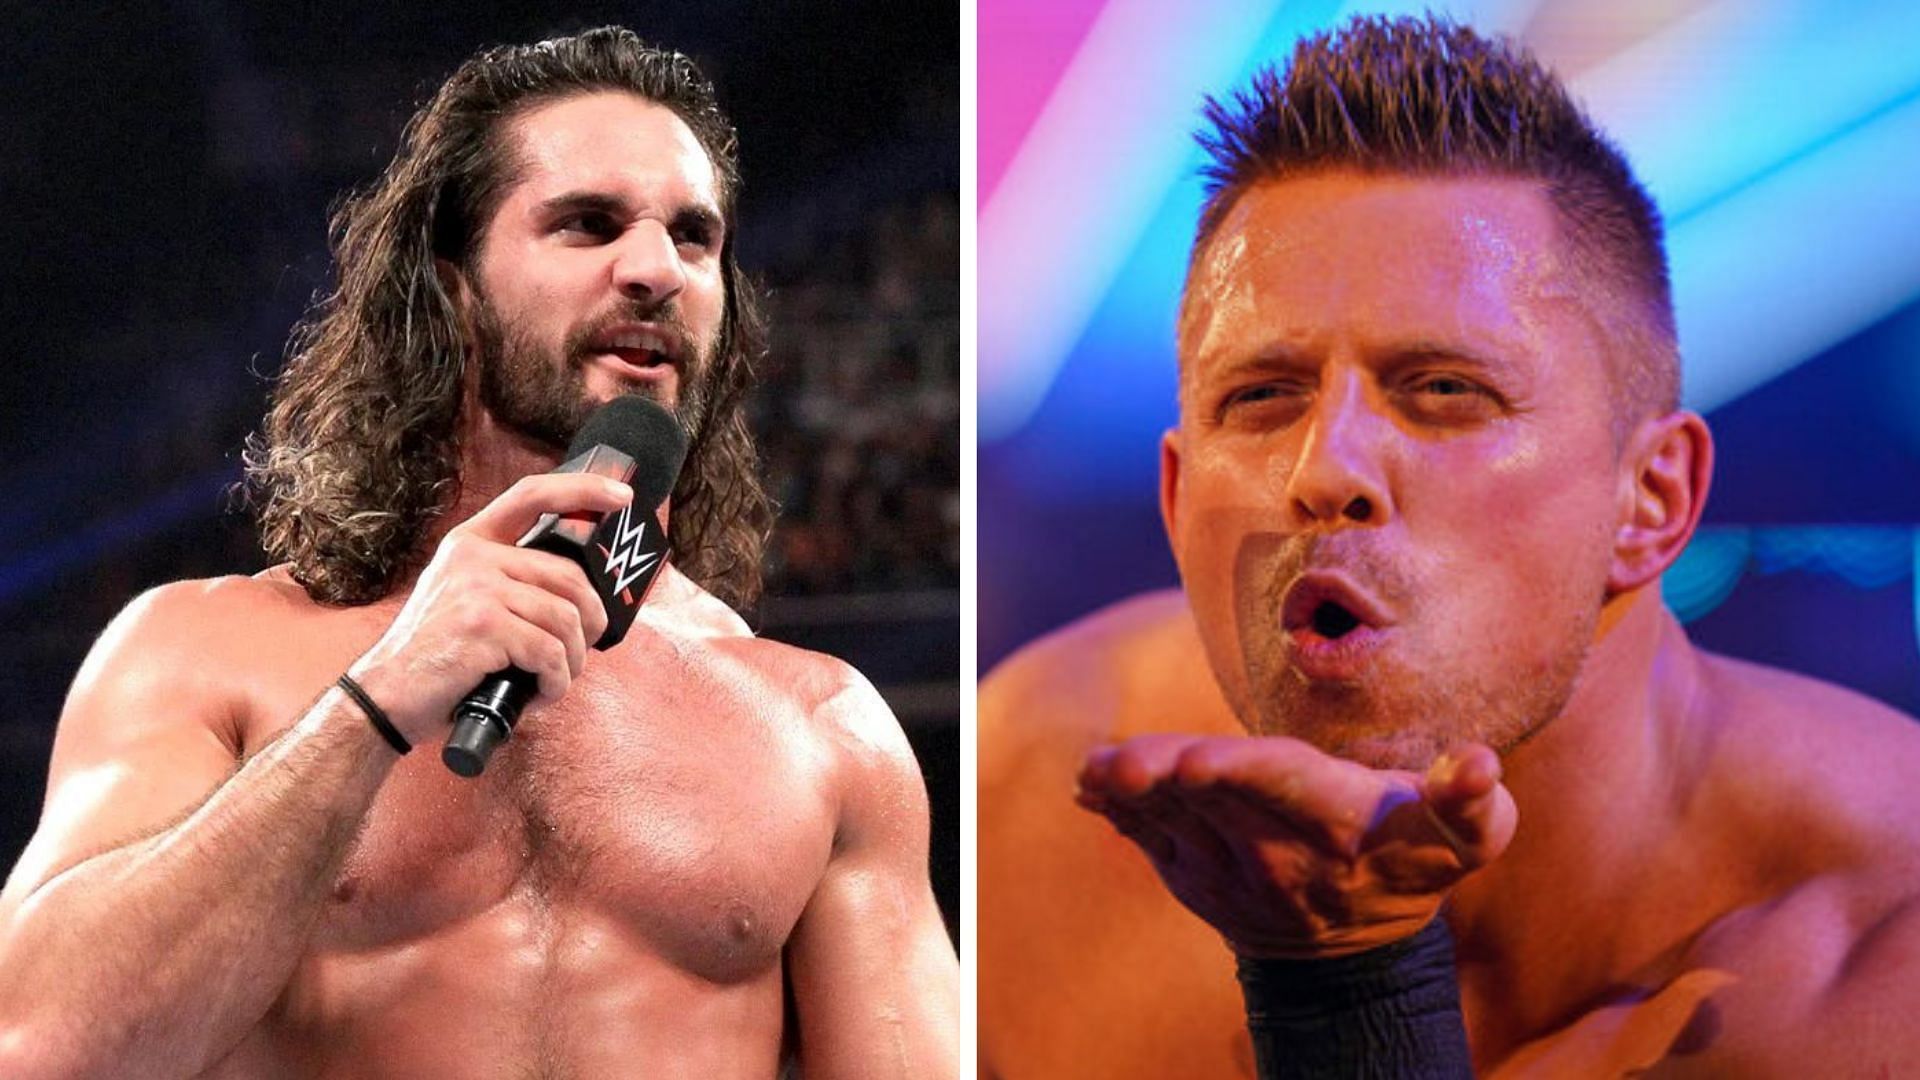 Seth Rollins will face The Miz tonight on WWE RAW.